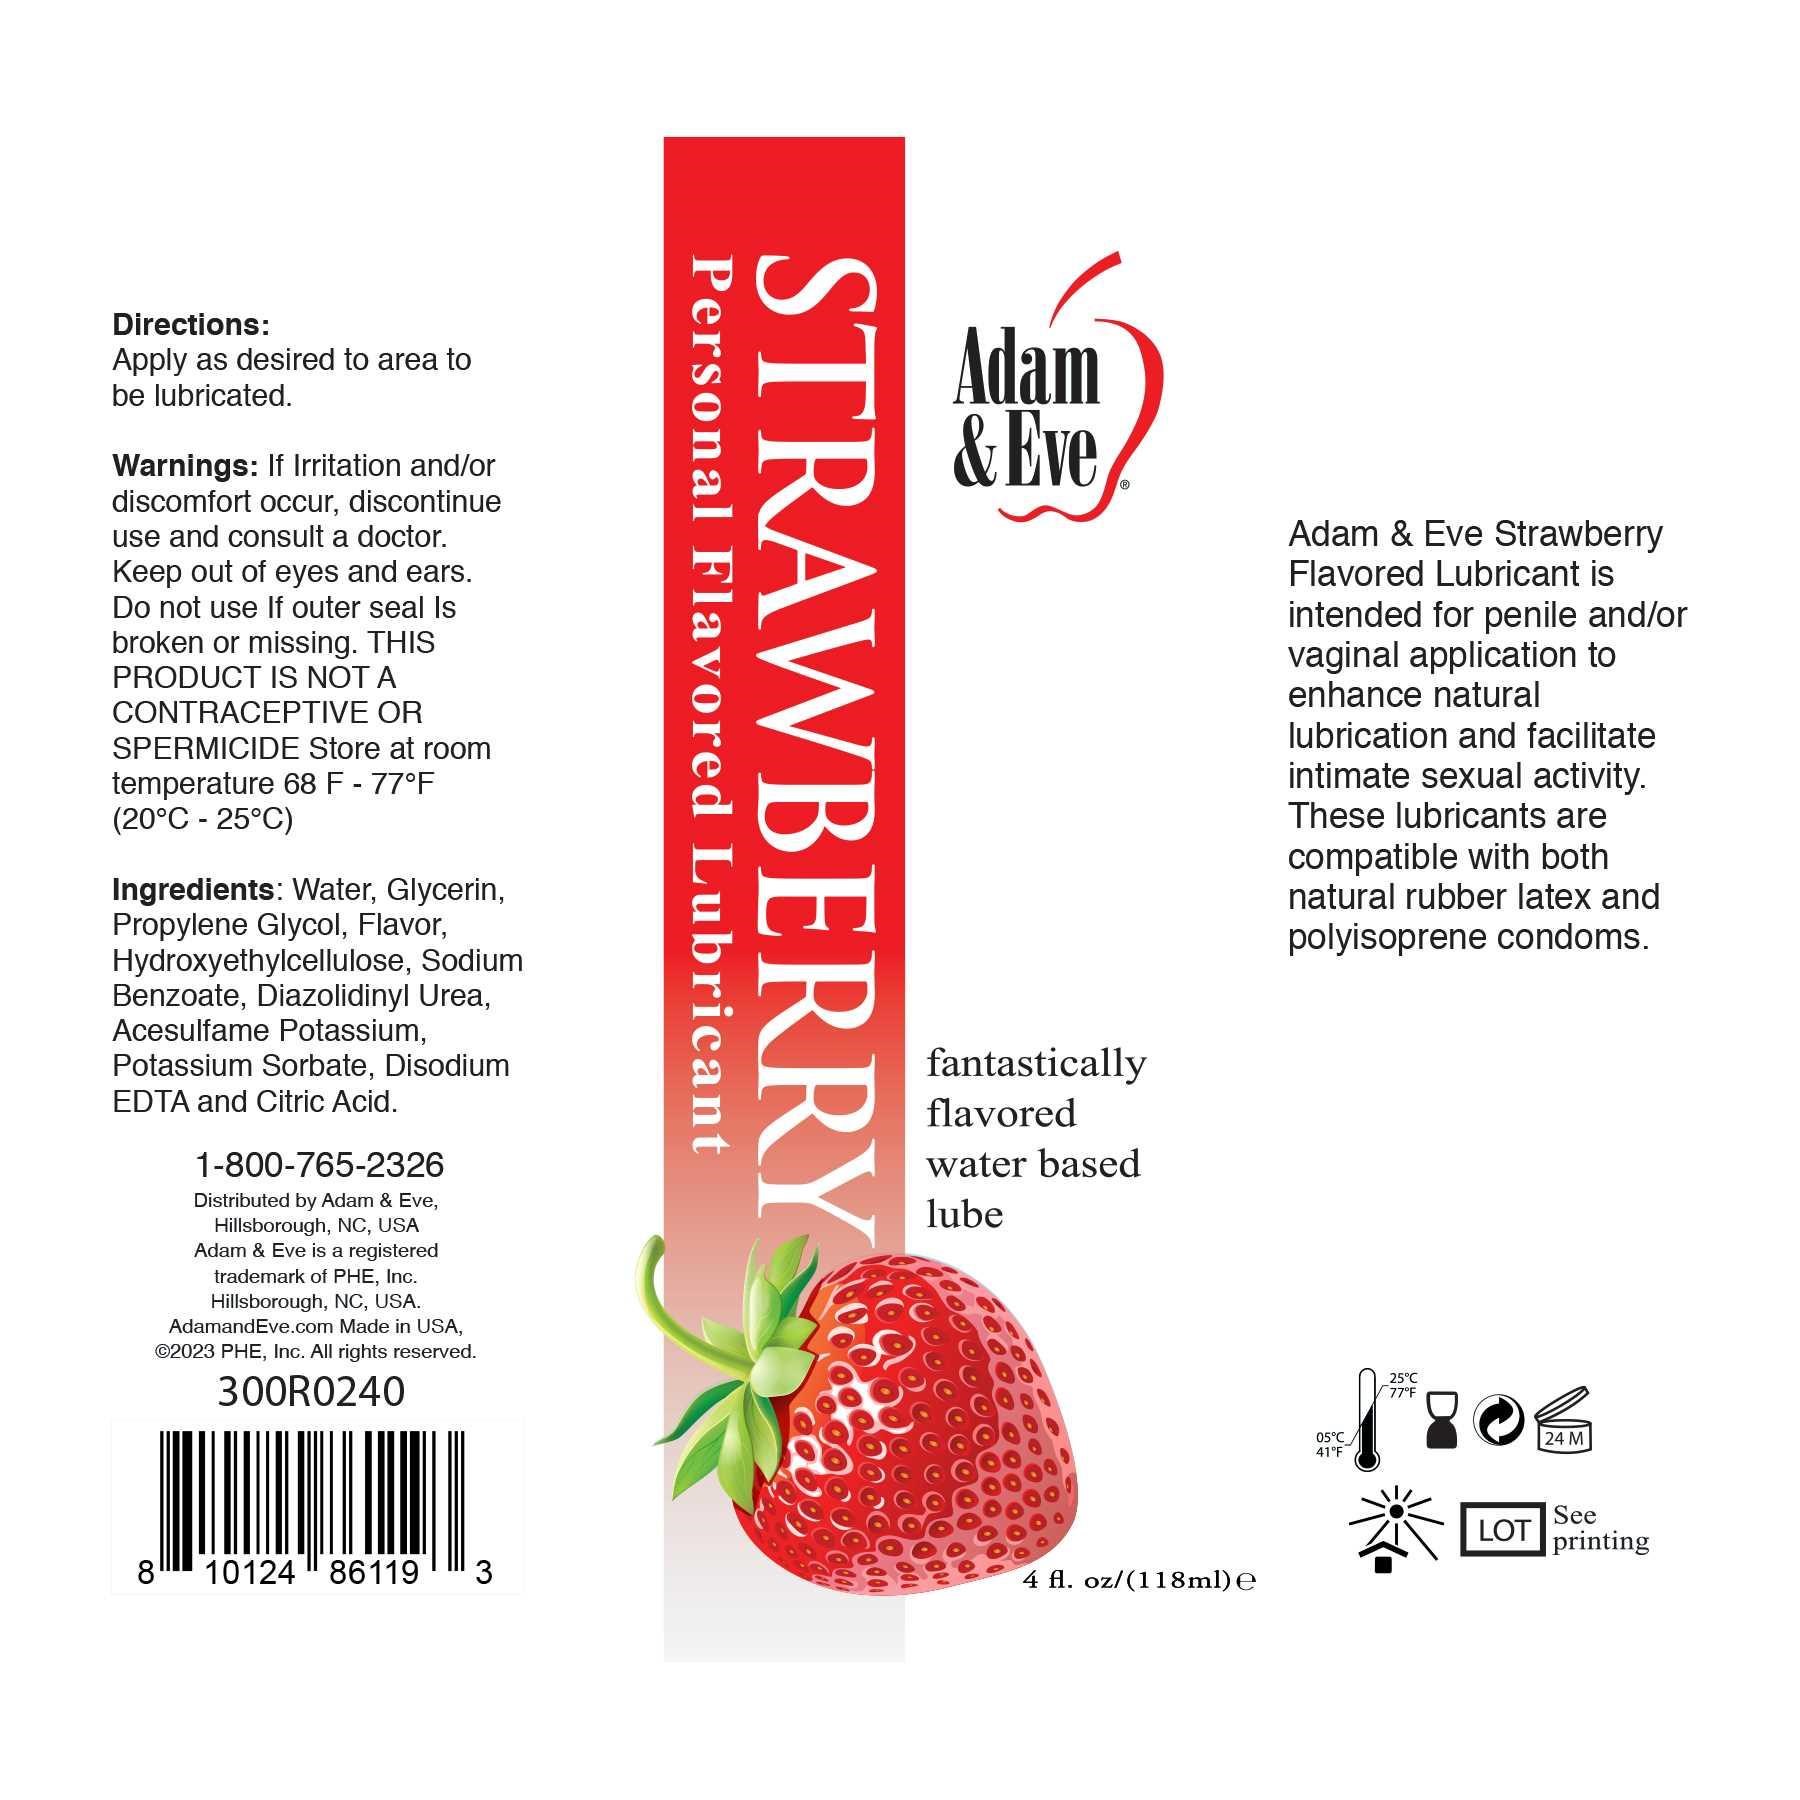 strawberry label